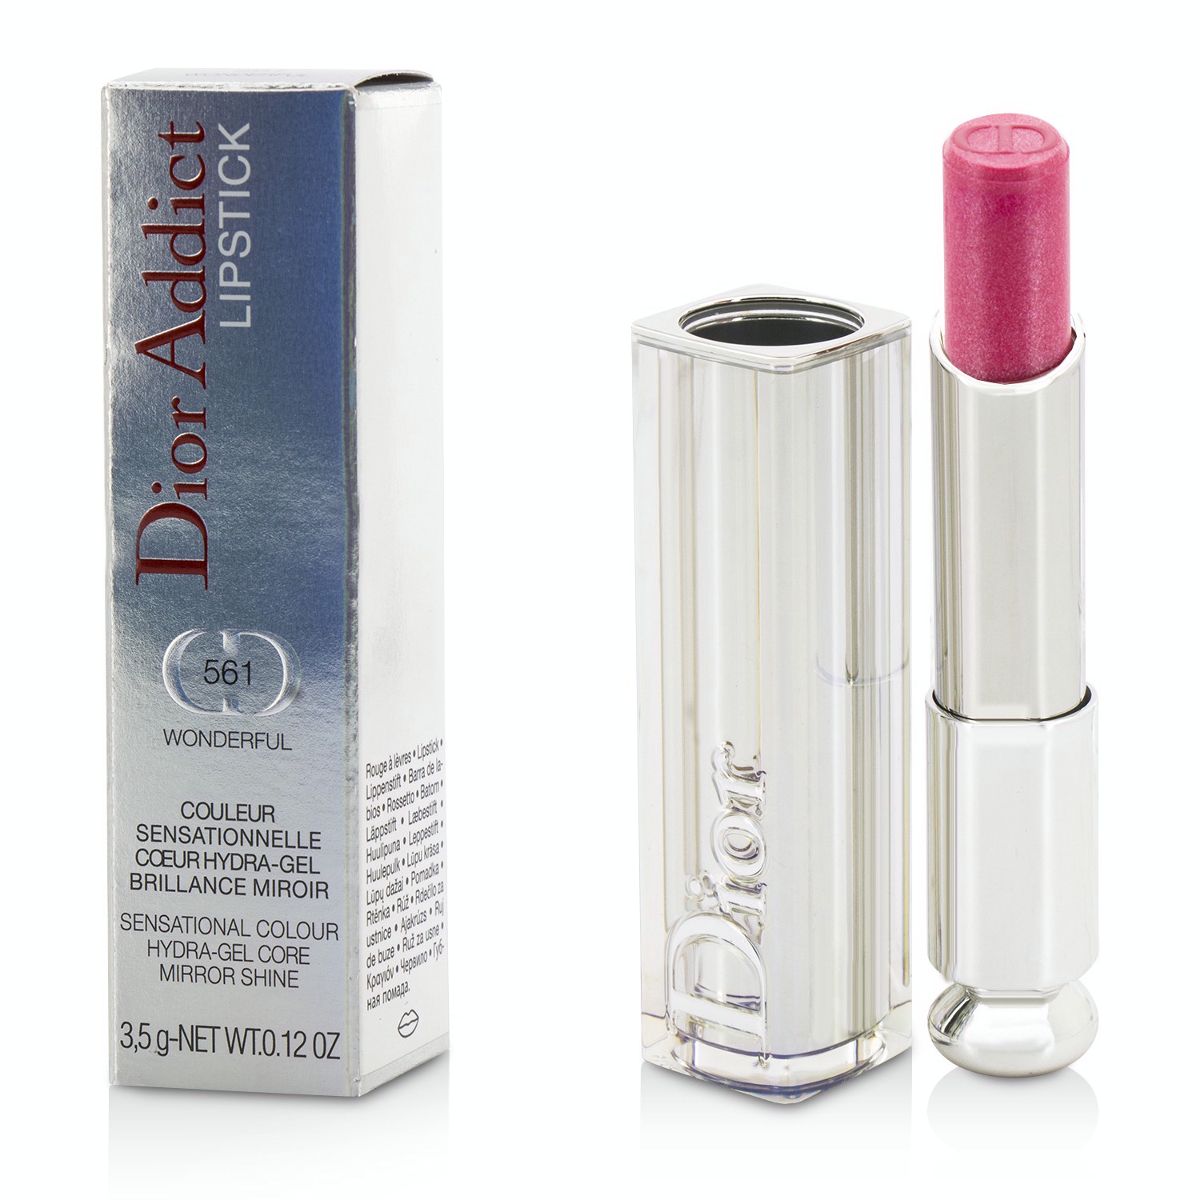 Dior Addict Hydra Gel Core Mirror Shine Lipstick - #561 Wonderful Christian Dior Image